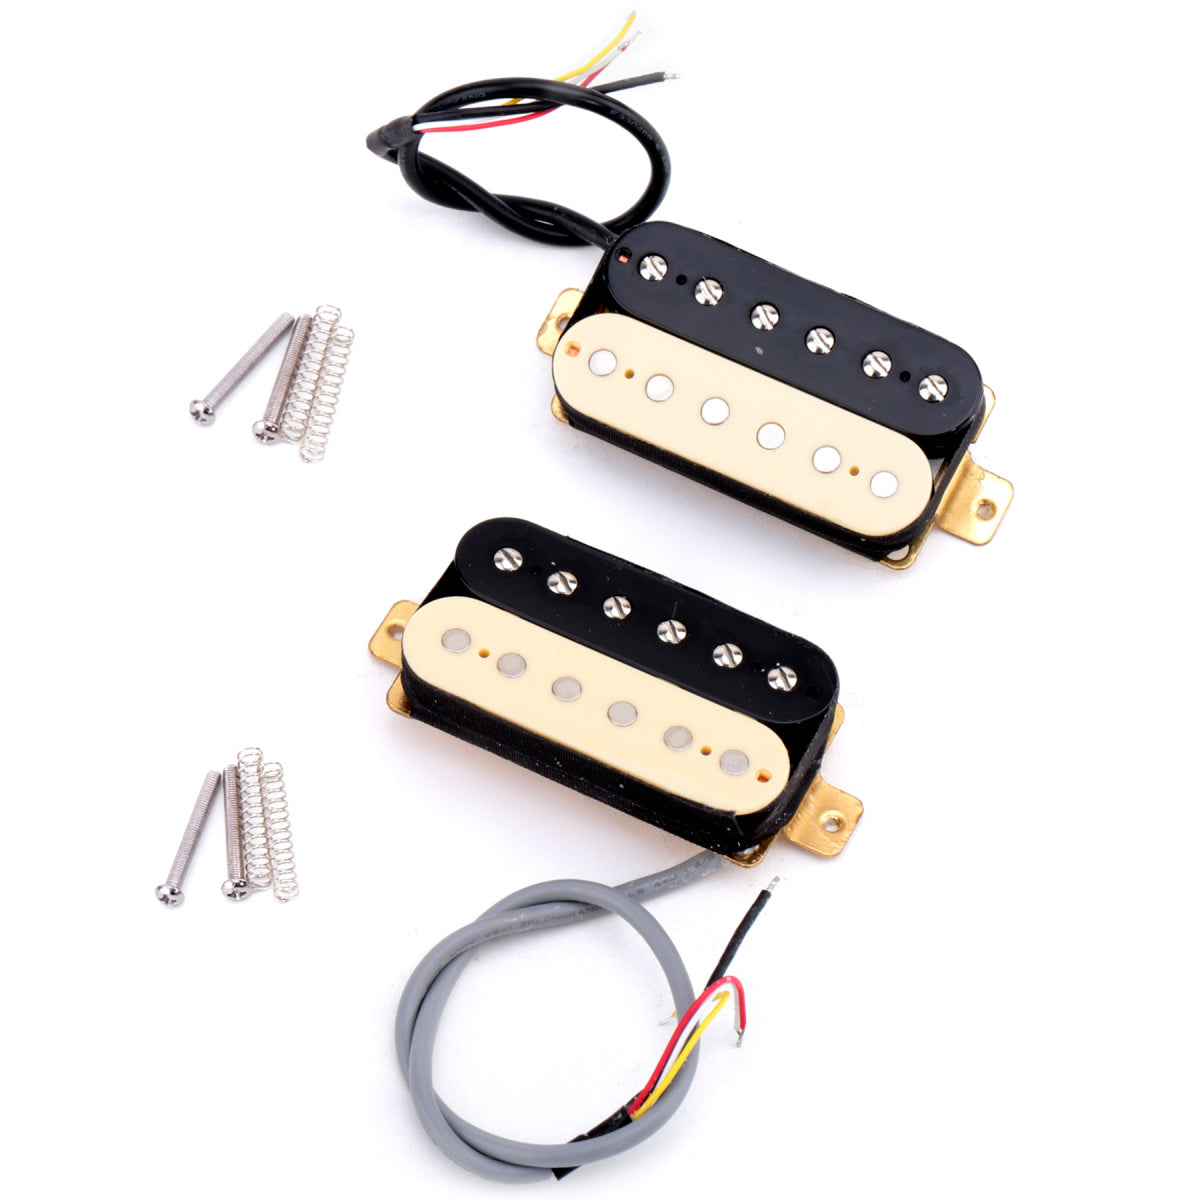 Musiclily Pro Alnico 5 Humbucker Neck & Bridge Pickups Set for Electric Guitar, Zebra